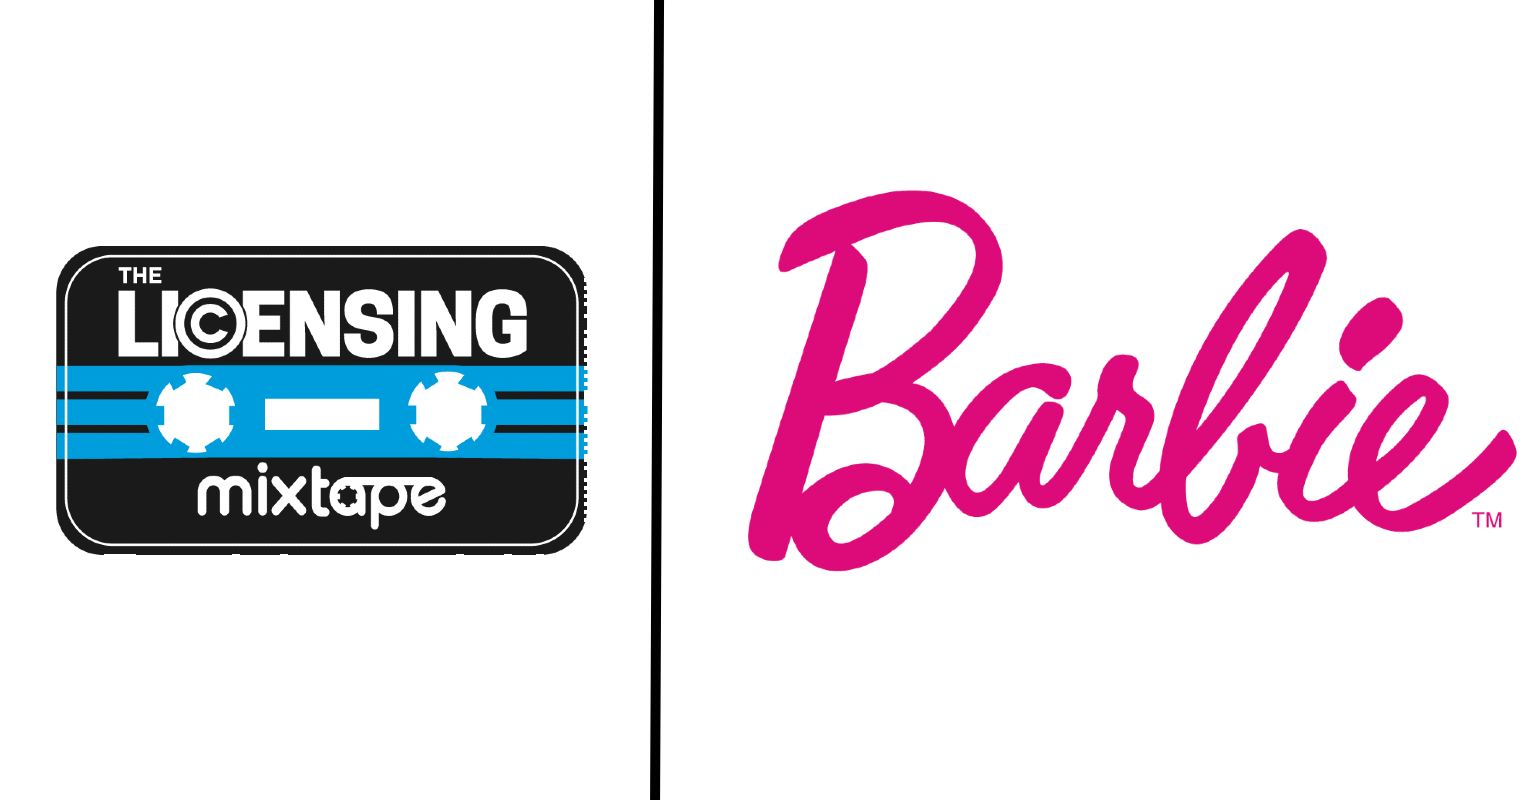 Barbie Logo Editorial Illustrative on White Background Editorial Stock  Image - Illustration of texture, emblem: 210442309